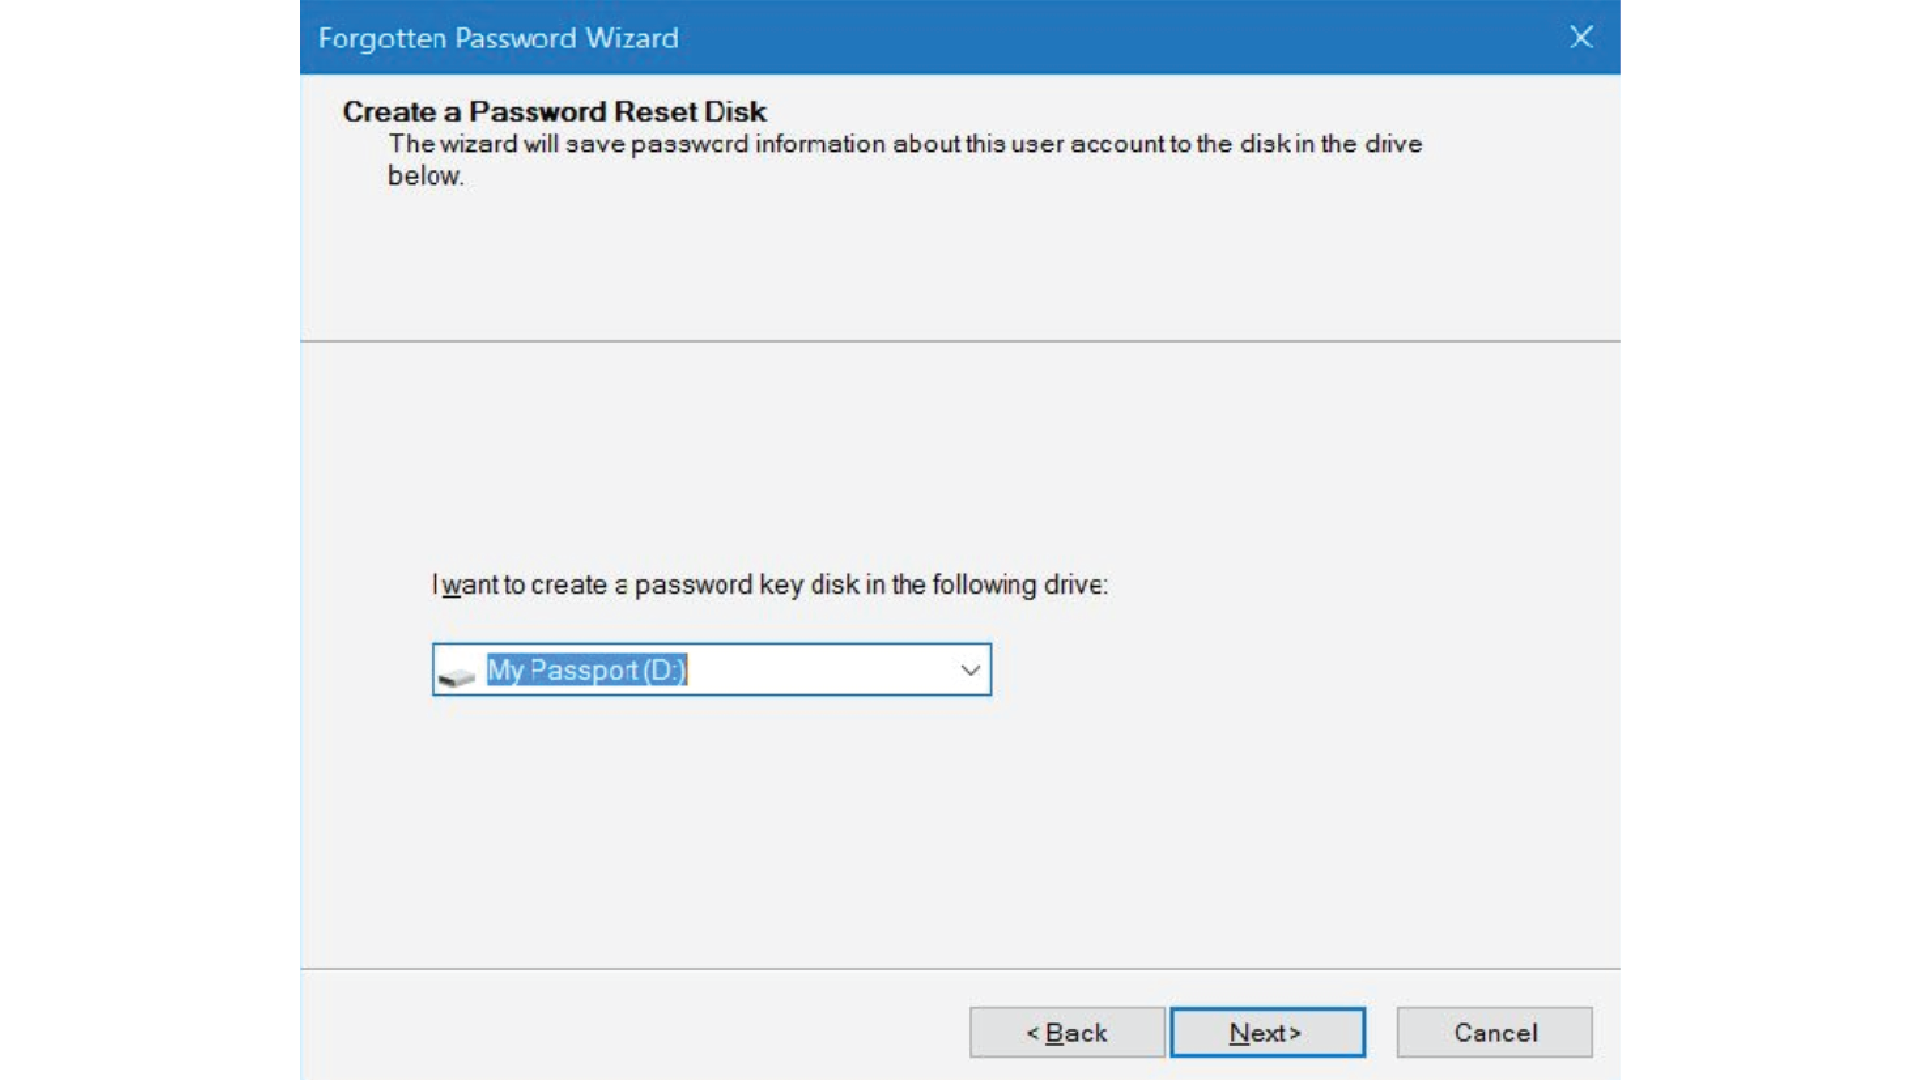 windows 10 password reset tool for usb